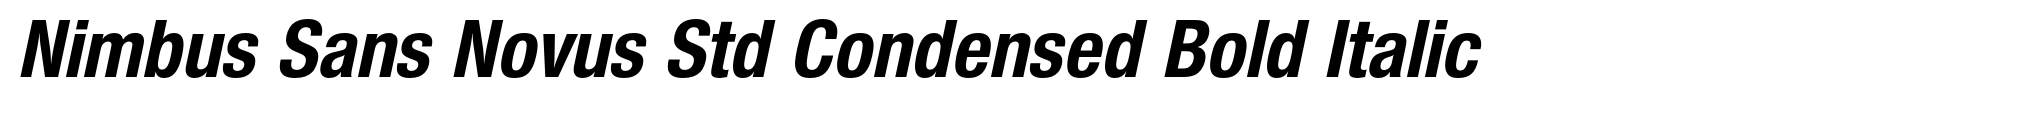 Nimbus Sans Novus Std Condensed Bold Italic image